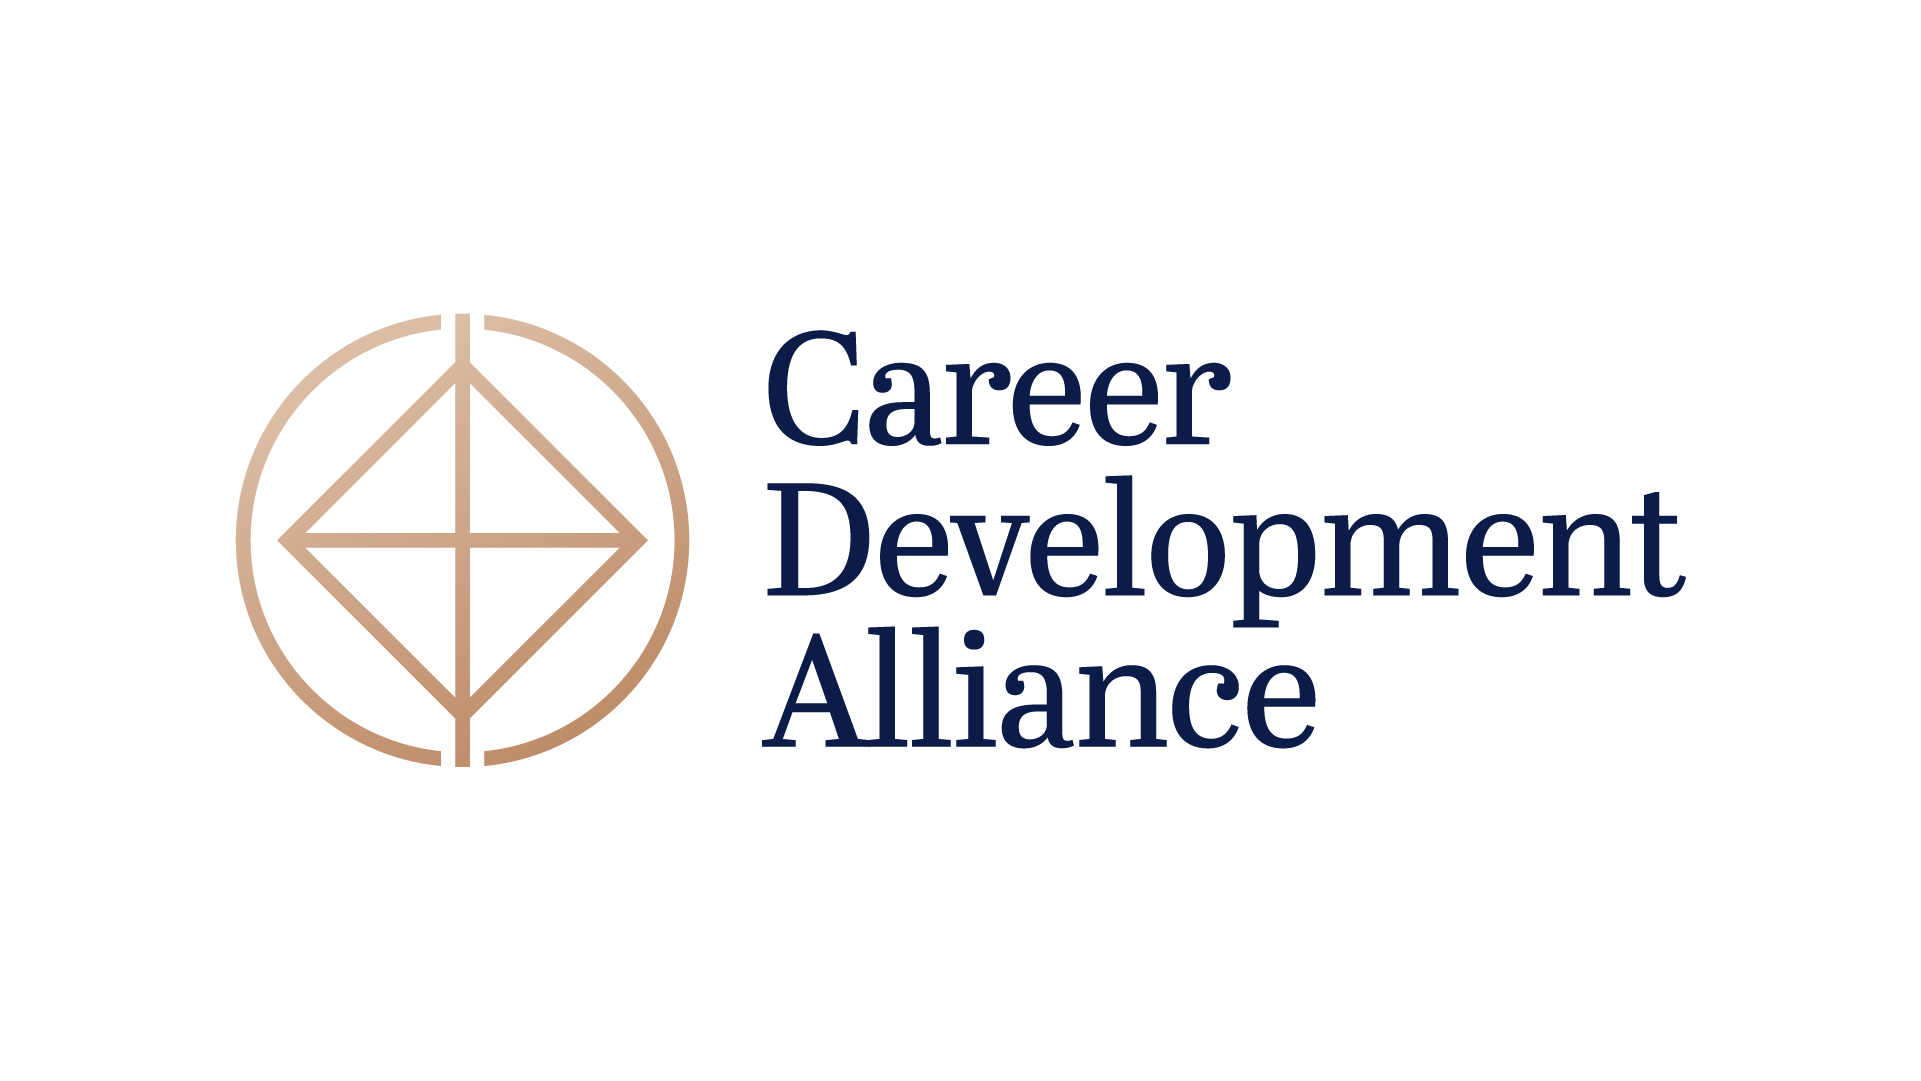 Career Development Alliance